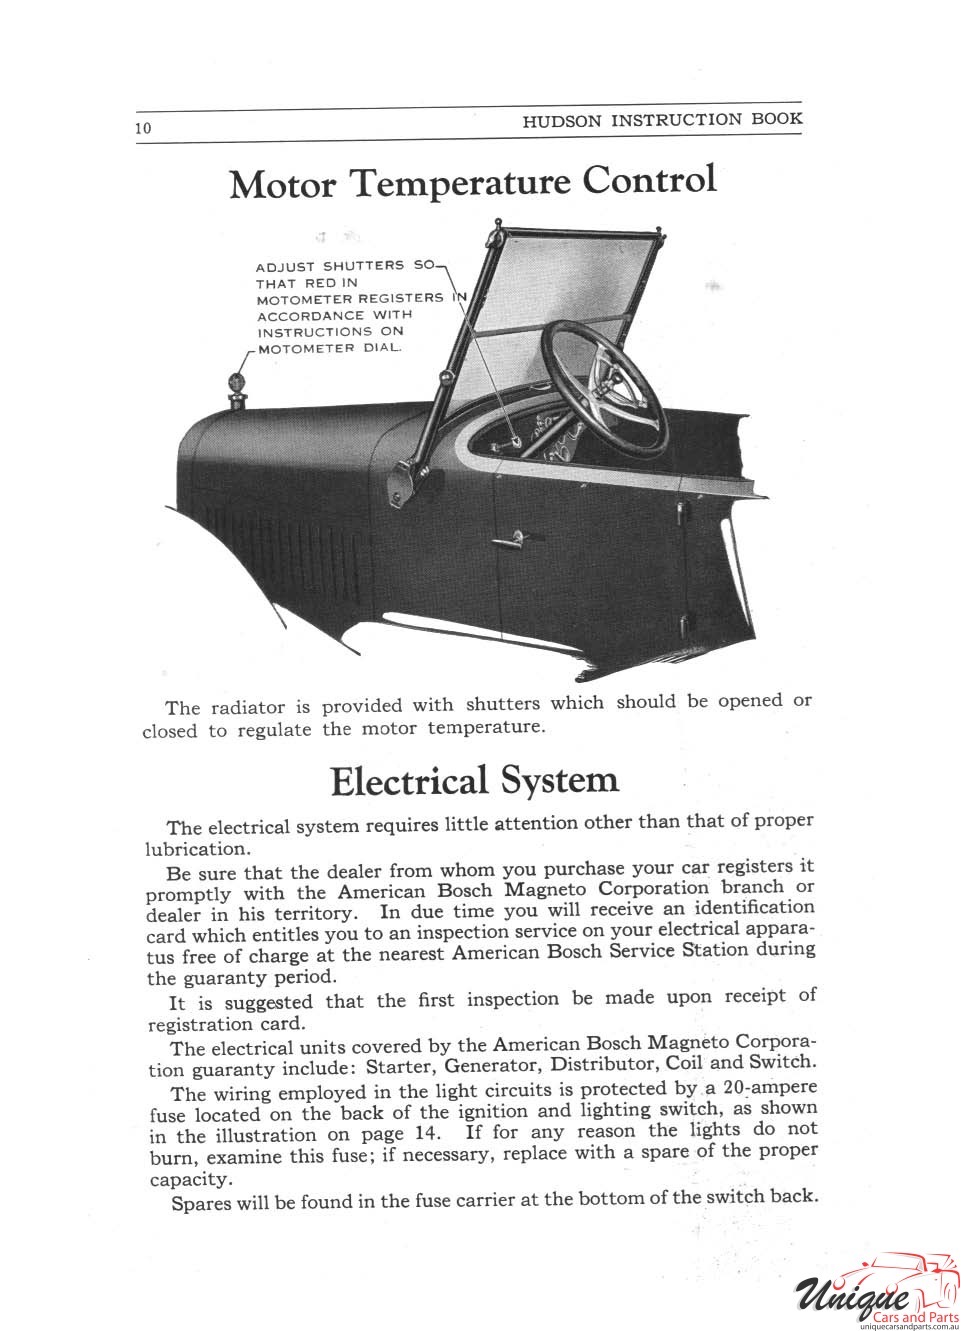 1925 Hudson Super-Six Instruction Book Page 22